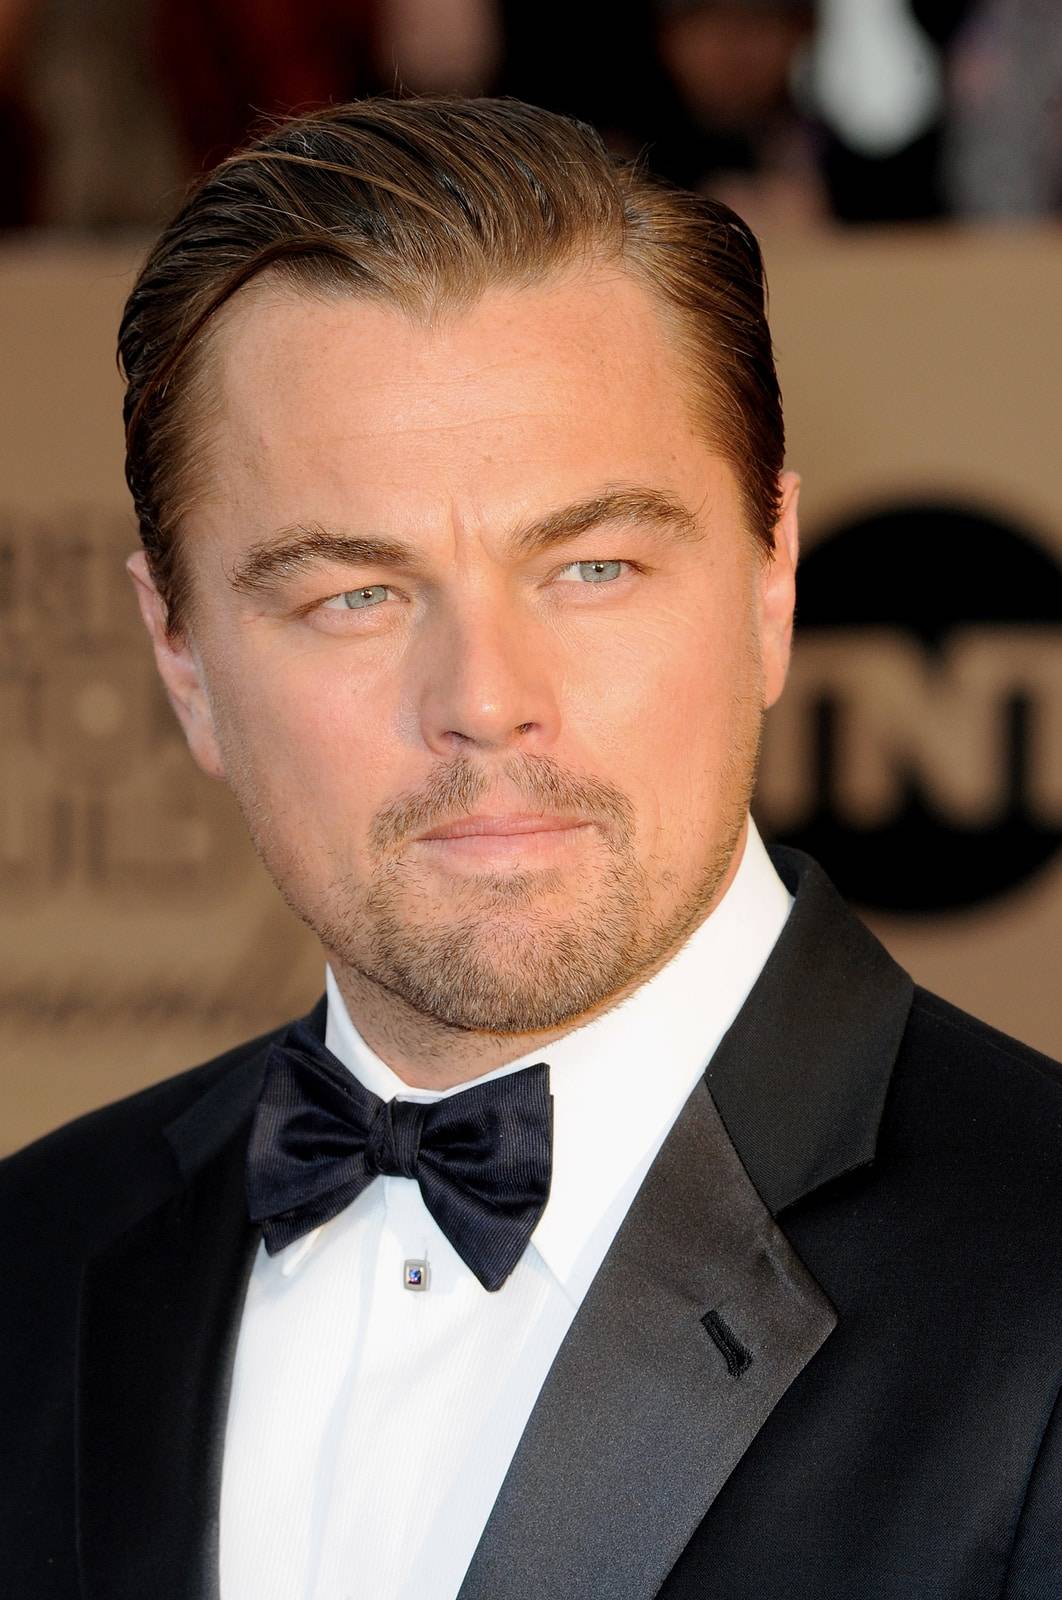 The environmentalist speech of Leonardo DiCaprio at the Academy Awards 2016